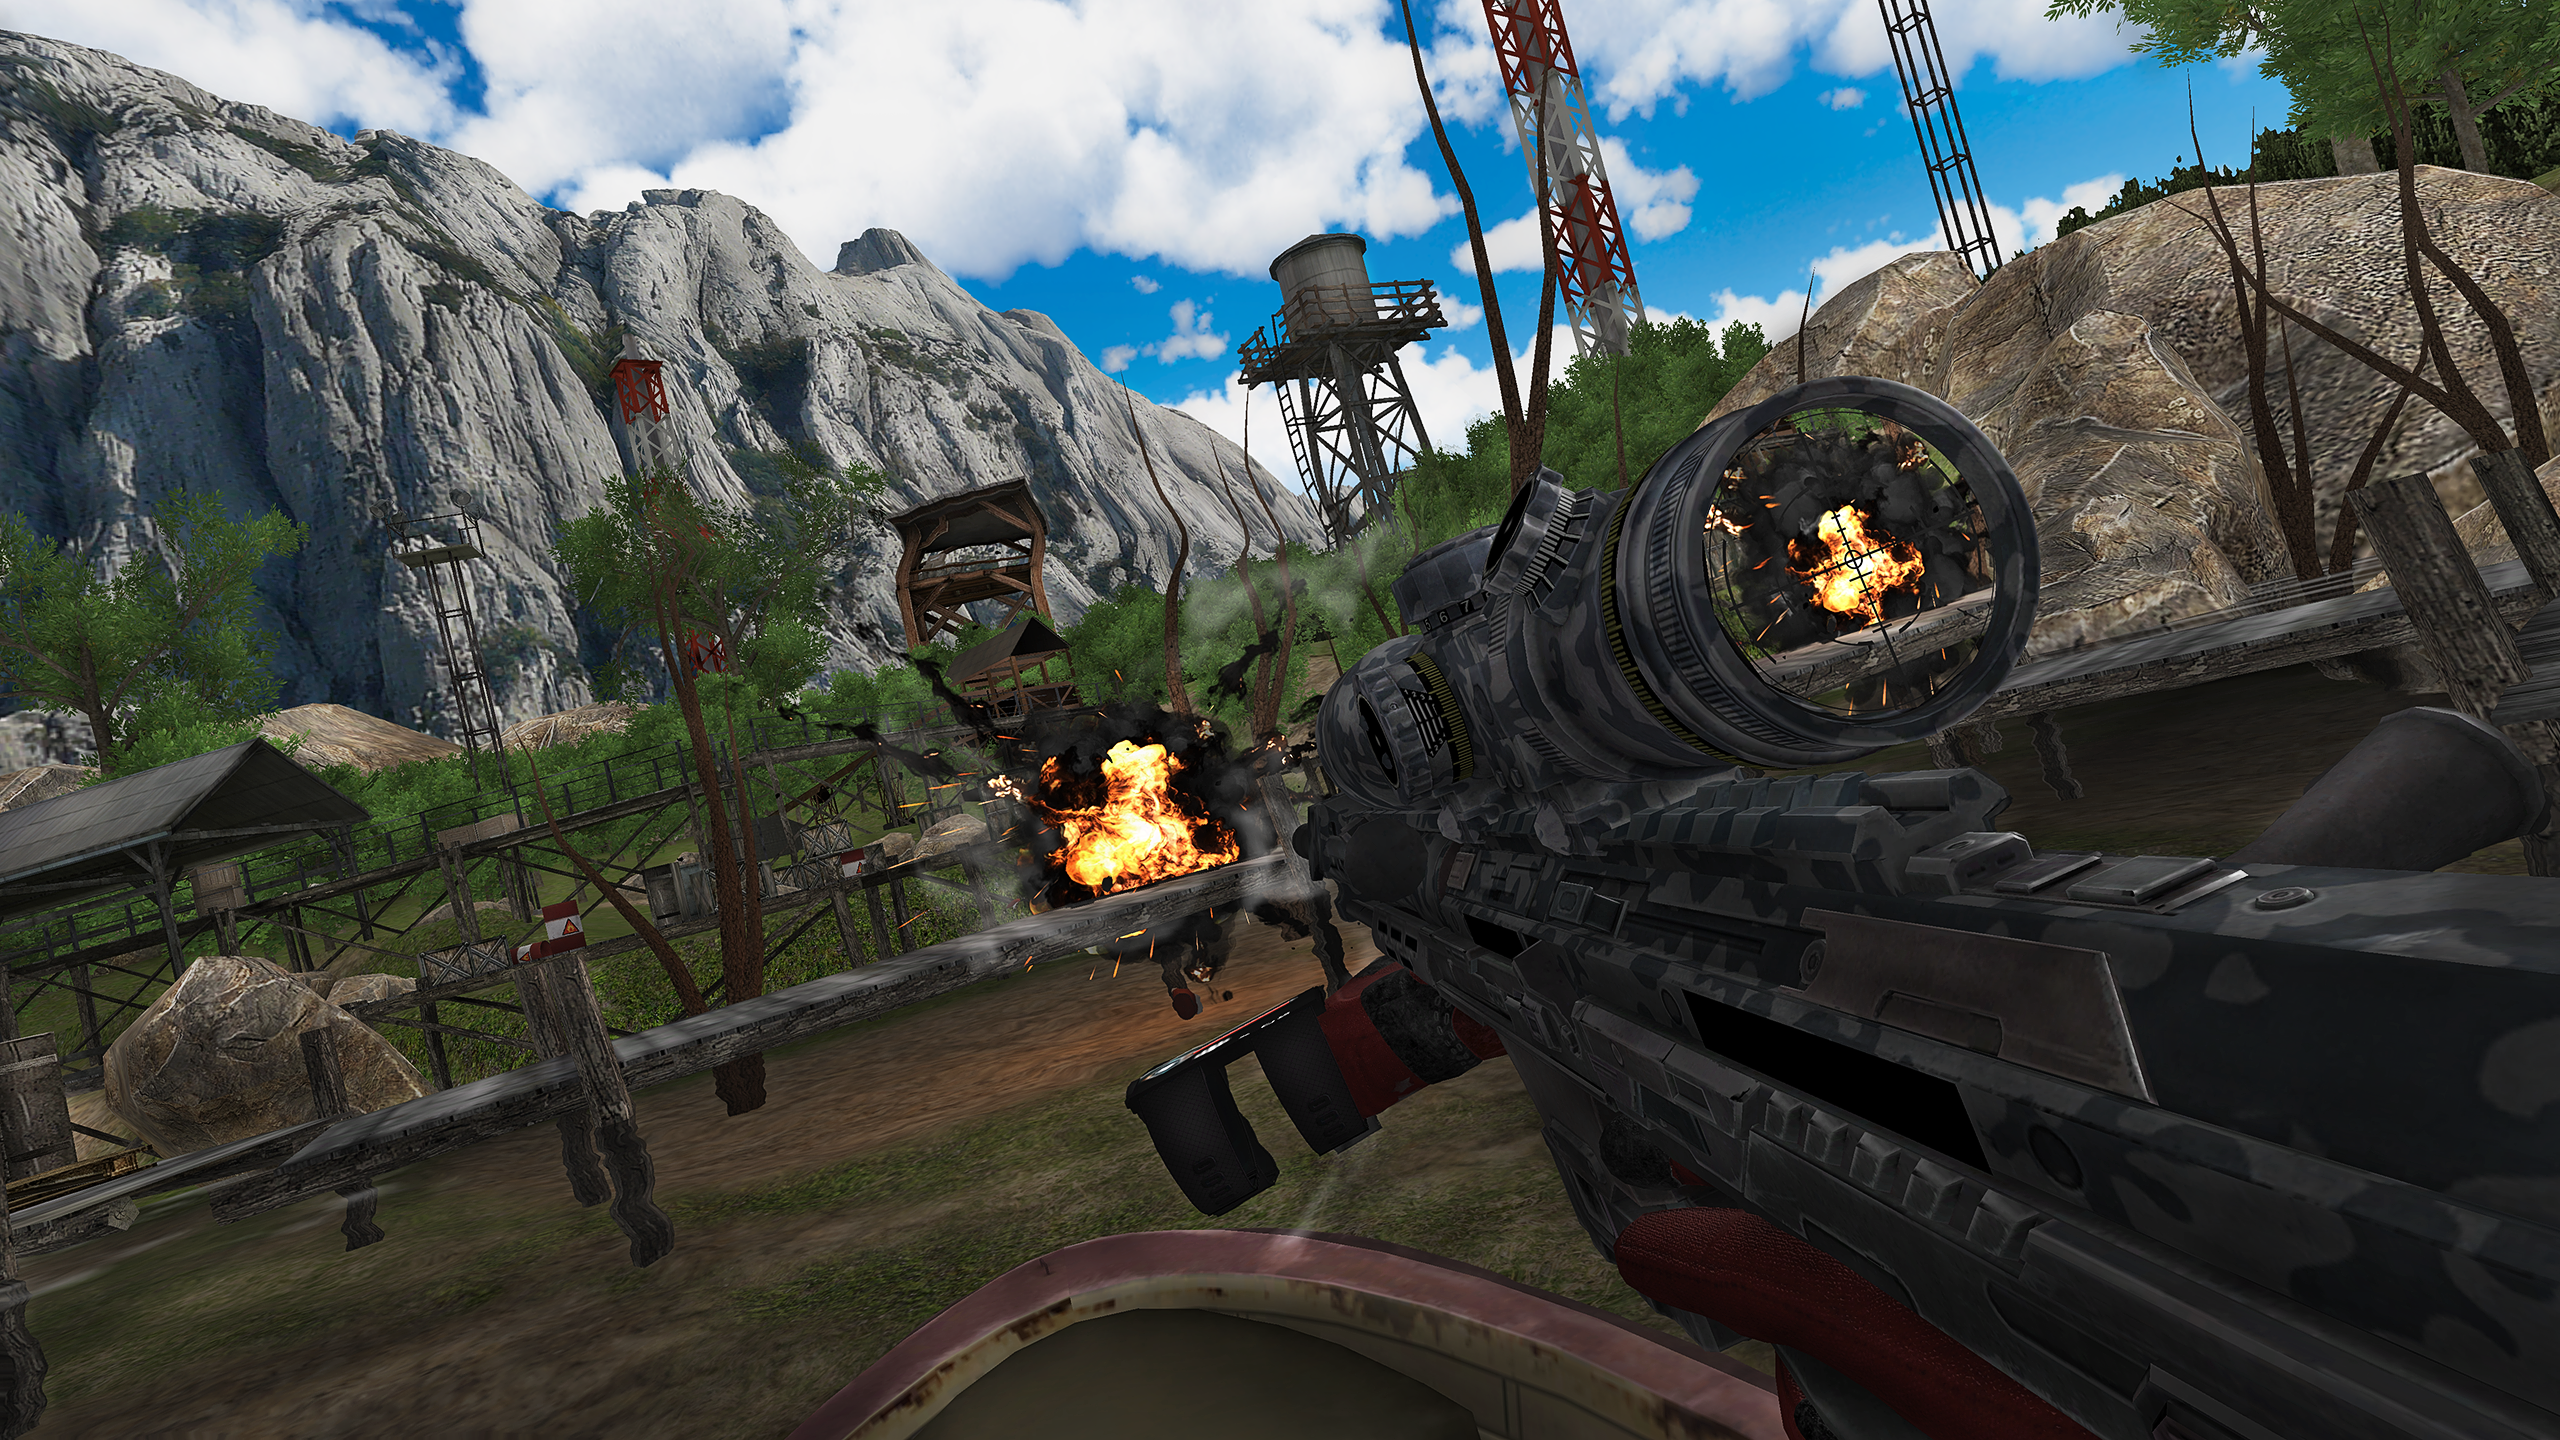 SniperRust VR screenshot 04 - Sniper Rust VR